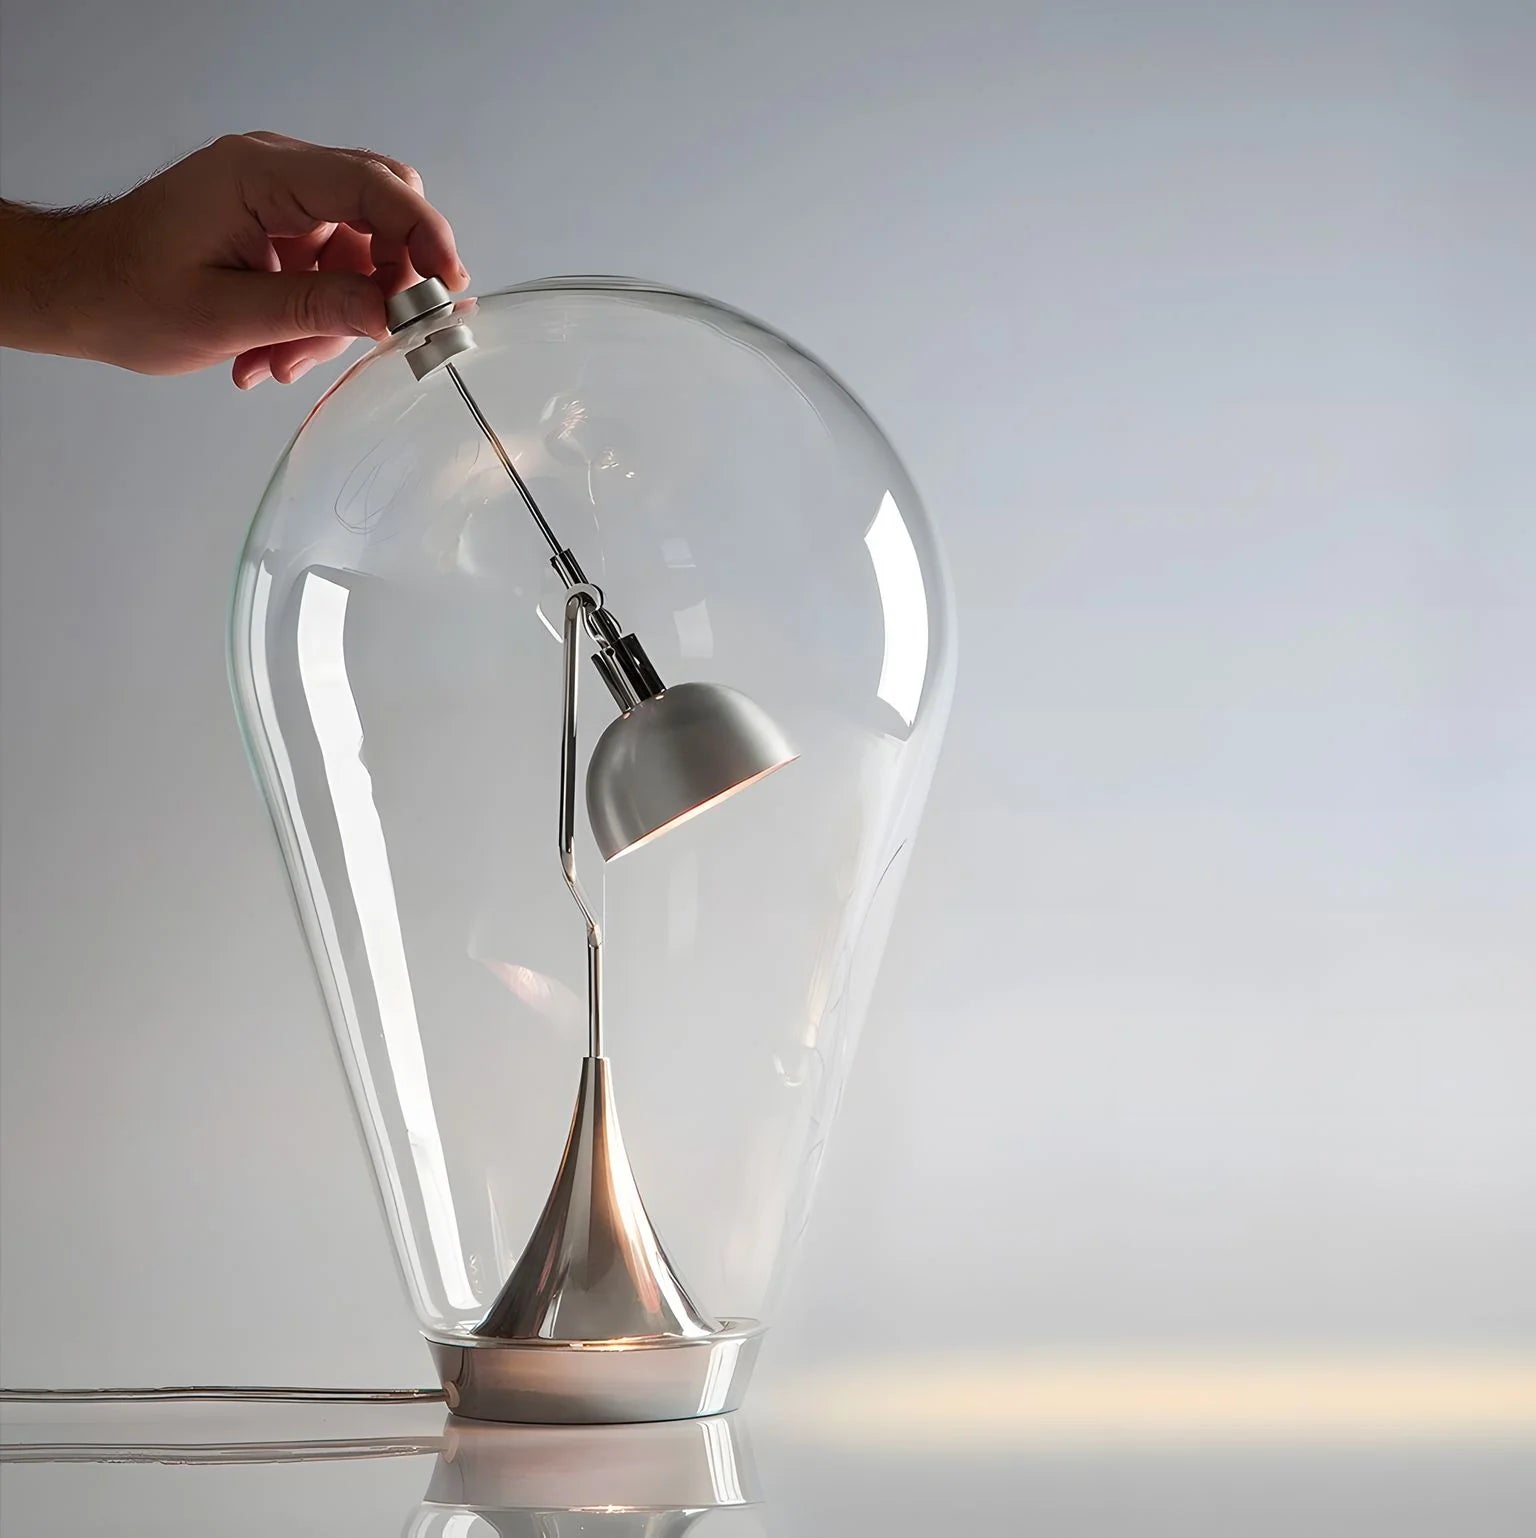 Magnetic Bulb Night Lamp - Sleek and Modern Design with Adjustable Illumination